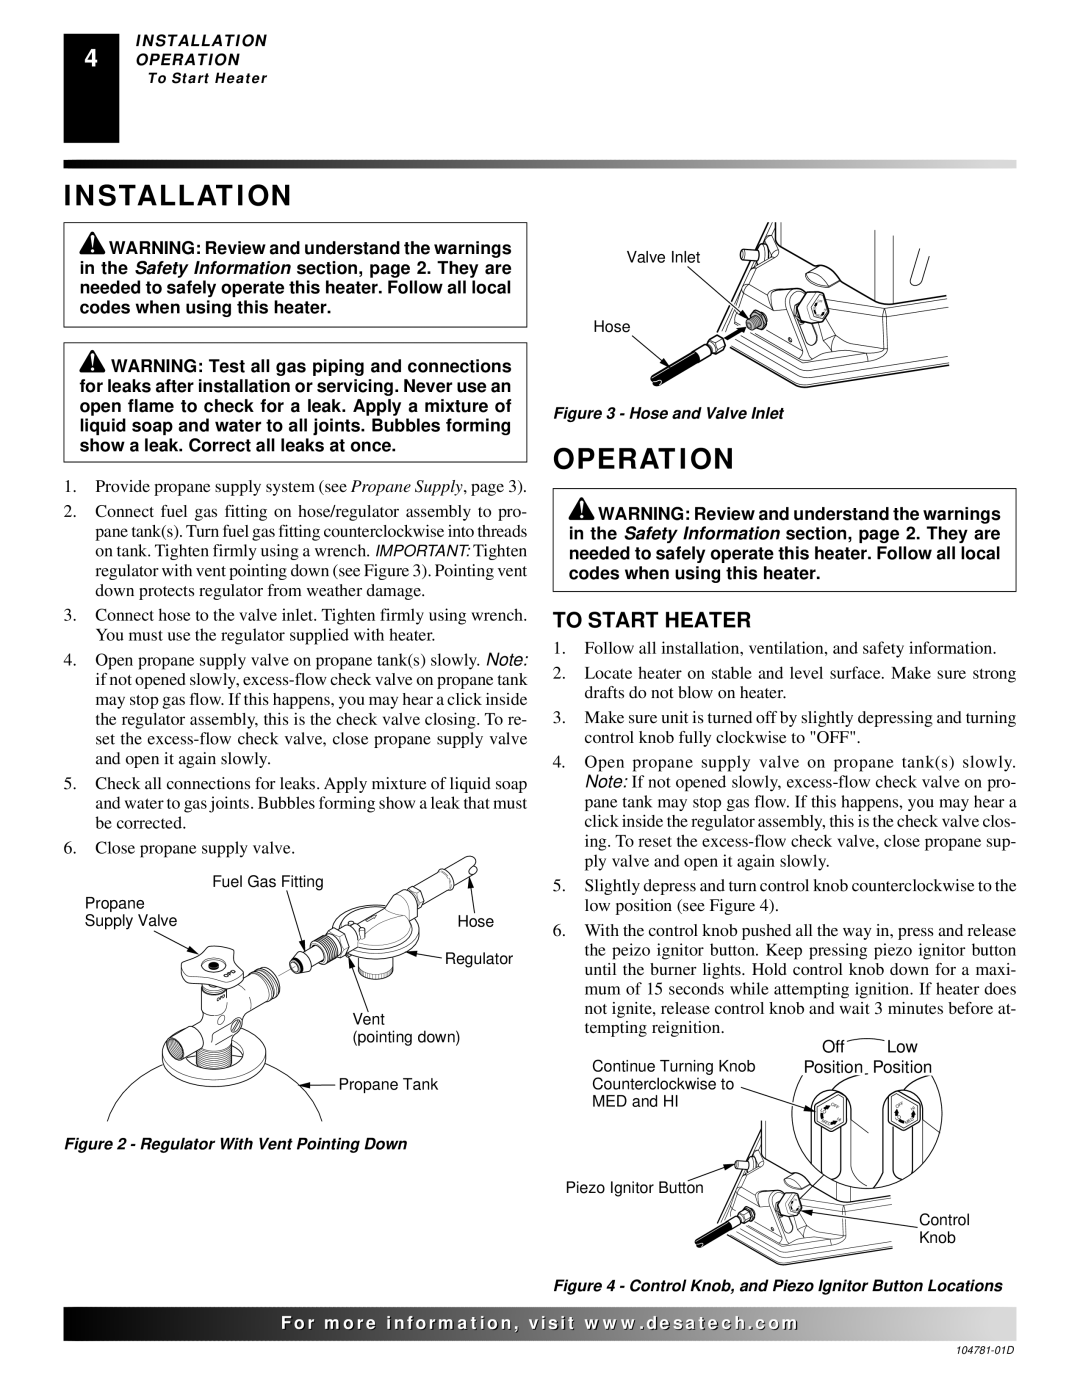 Desa RCCP80V owner manual Installation, Operation, To Start Heater 